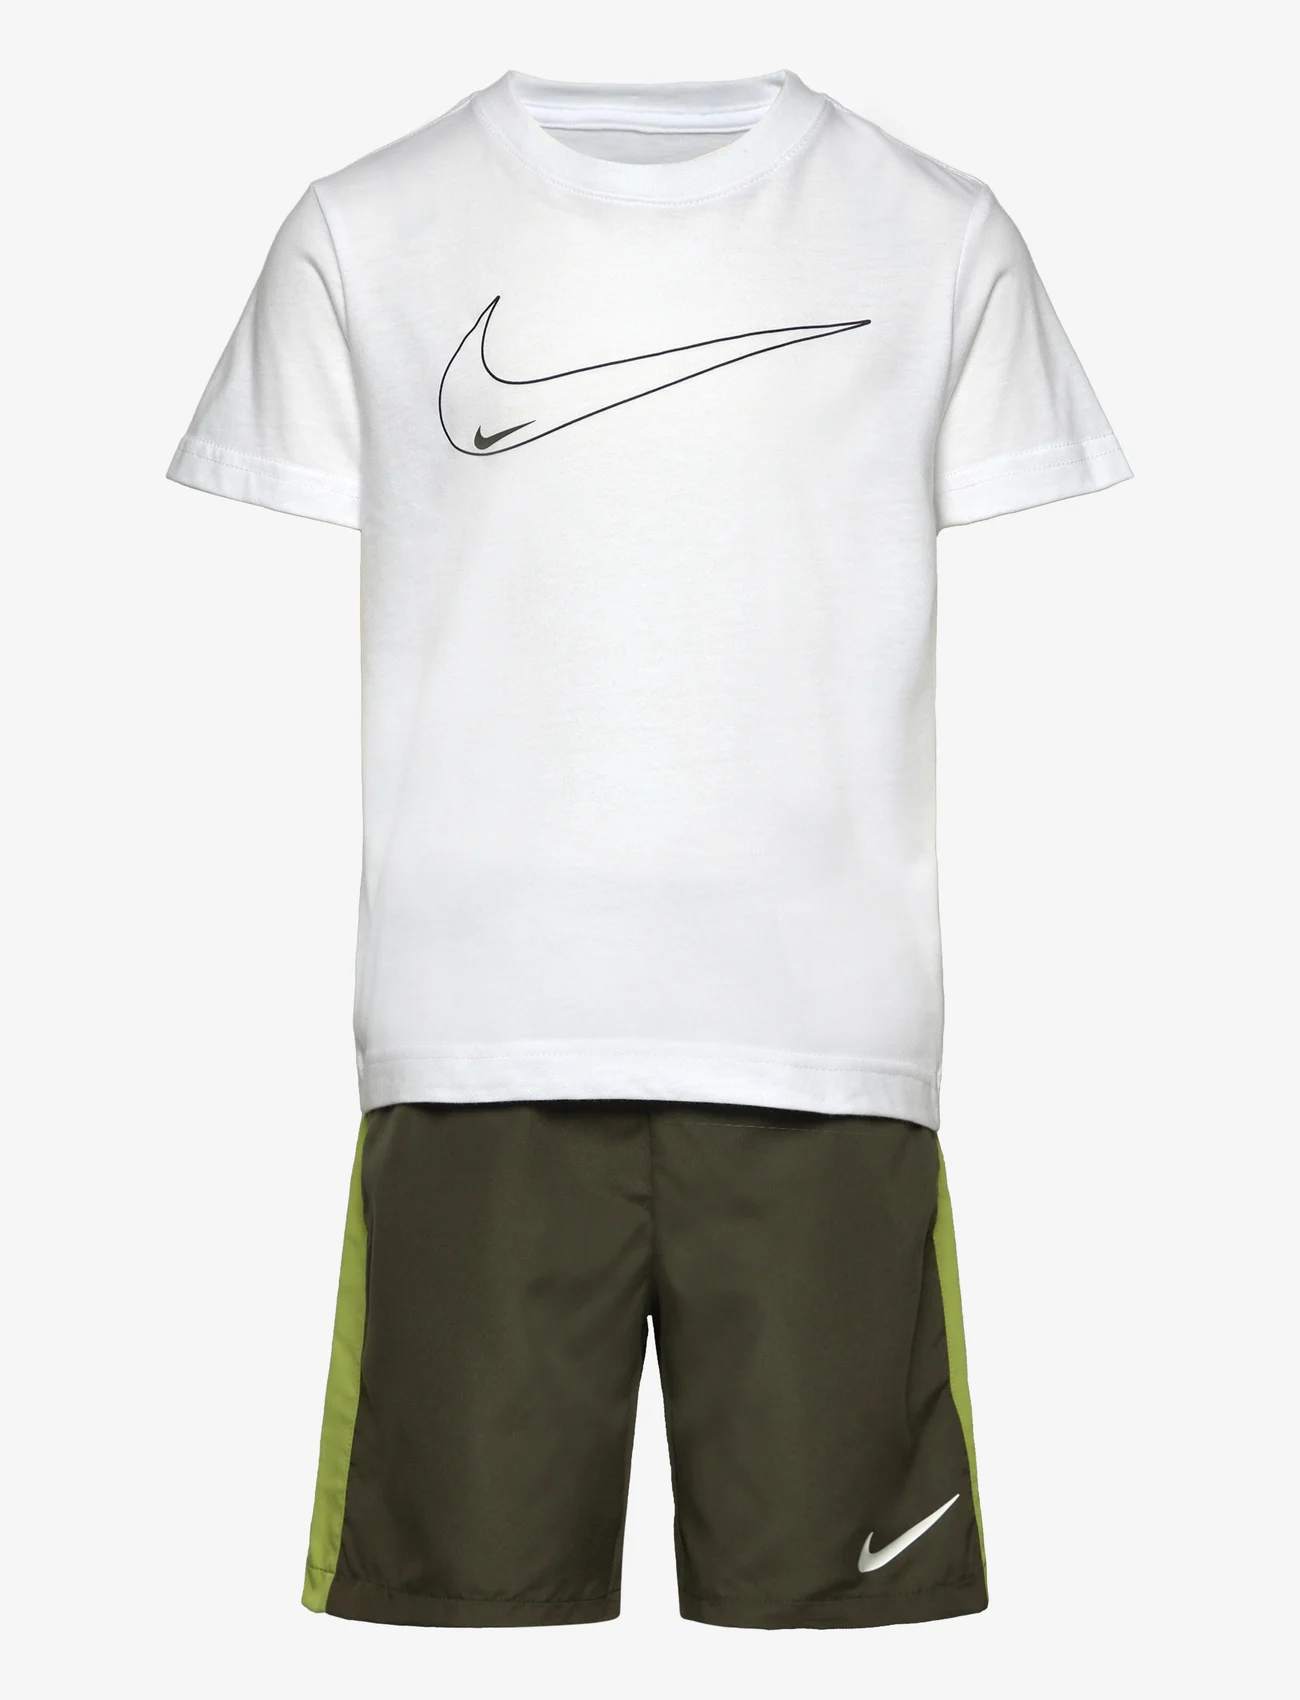 Nike - NKB B NSW CLUB SSNL WVN SHORT / NKB B NSW CLUB SSNL WVN SHOR - sets with short-sleeved t-shirt - cargo khaki - 0